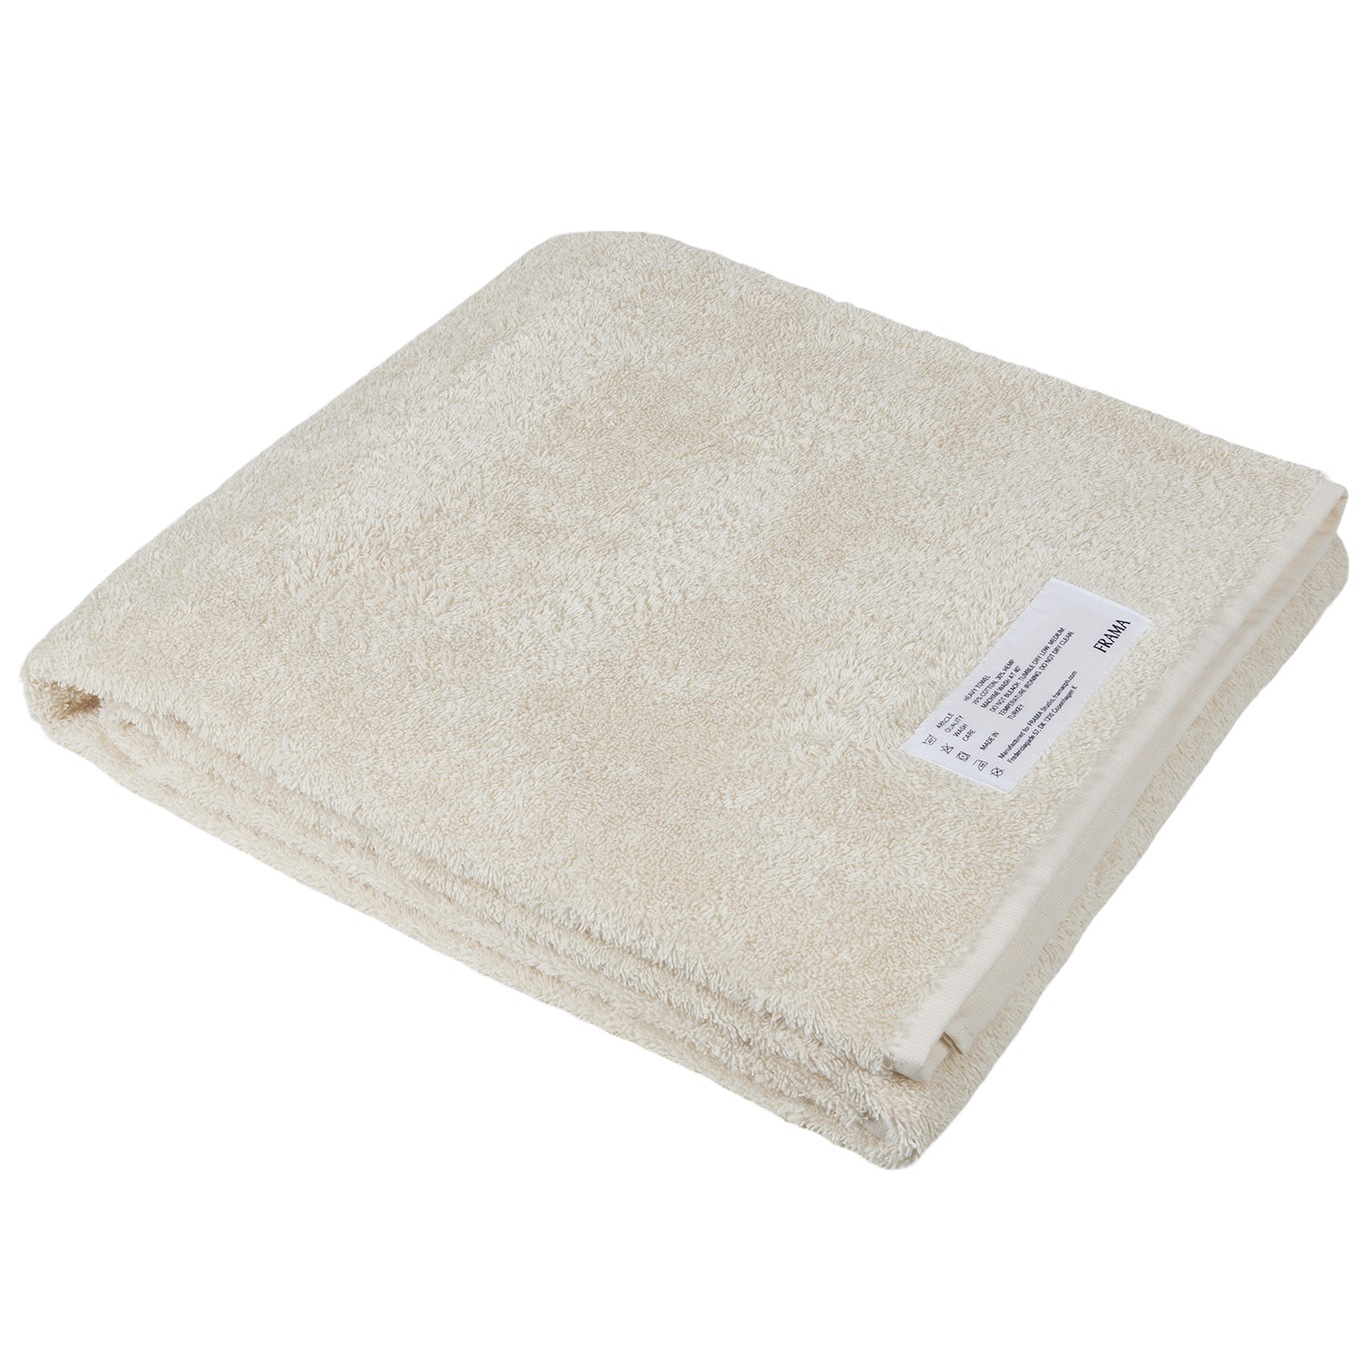 Heavy Towel Bath Sheet 100x150 cm, Bone White